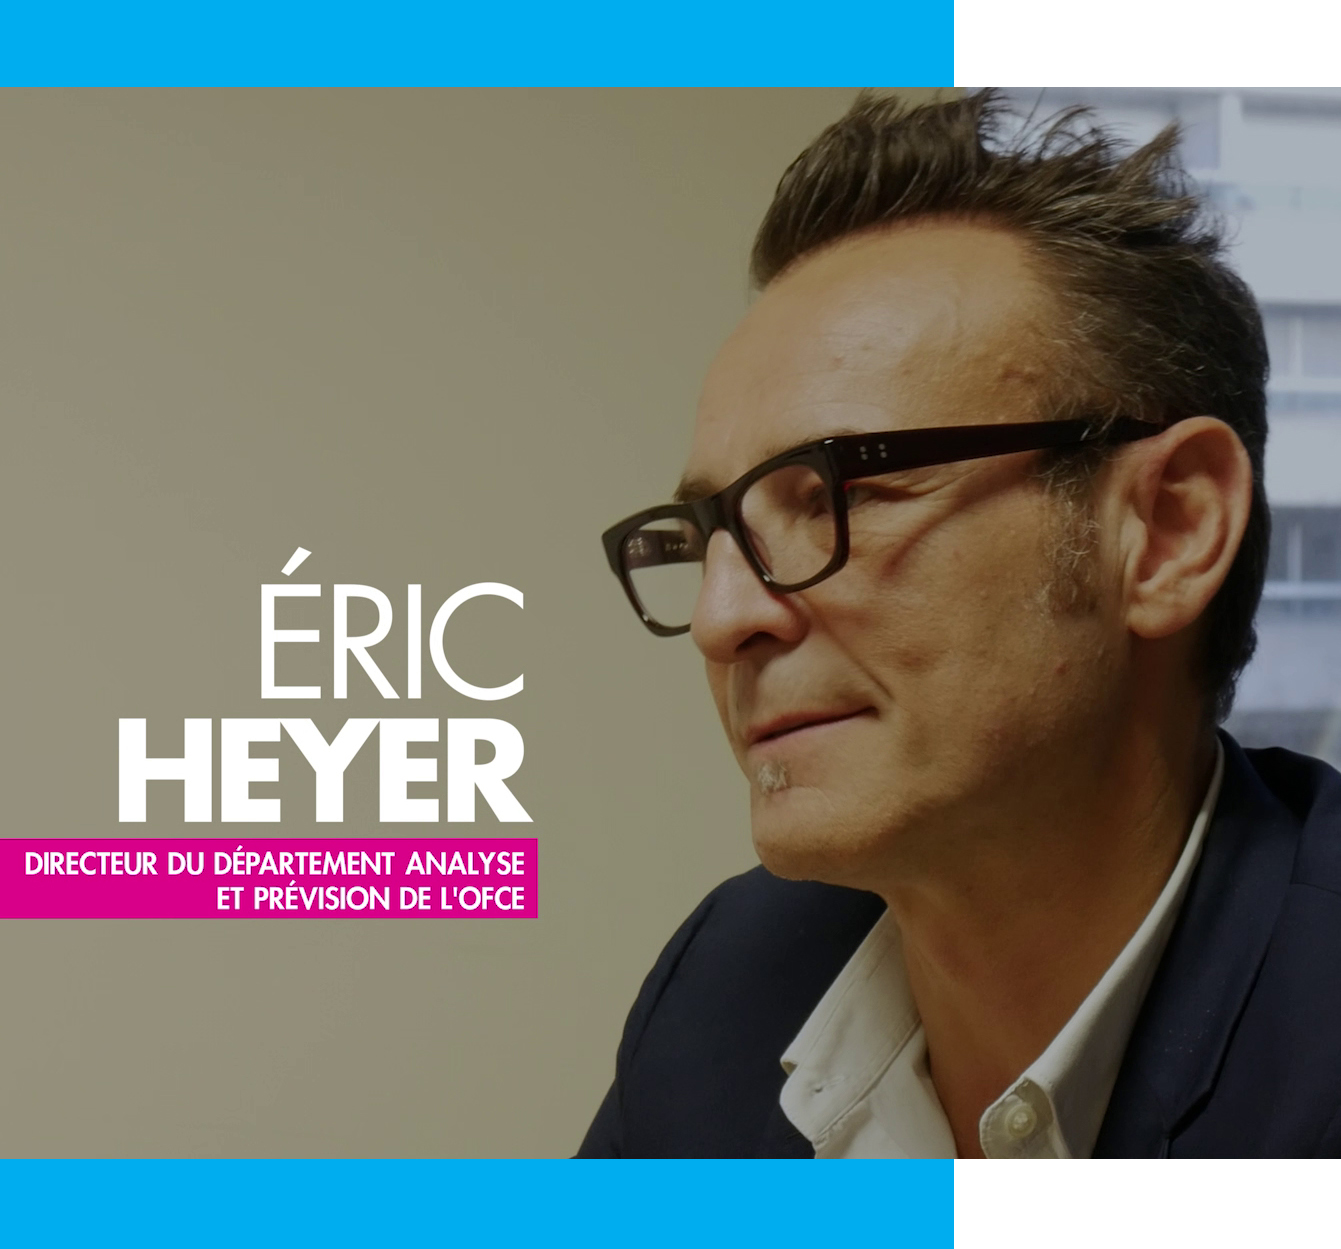 Play Video: ITW Eric HEYER